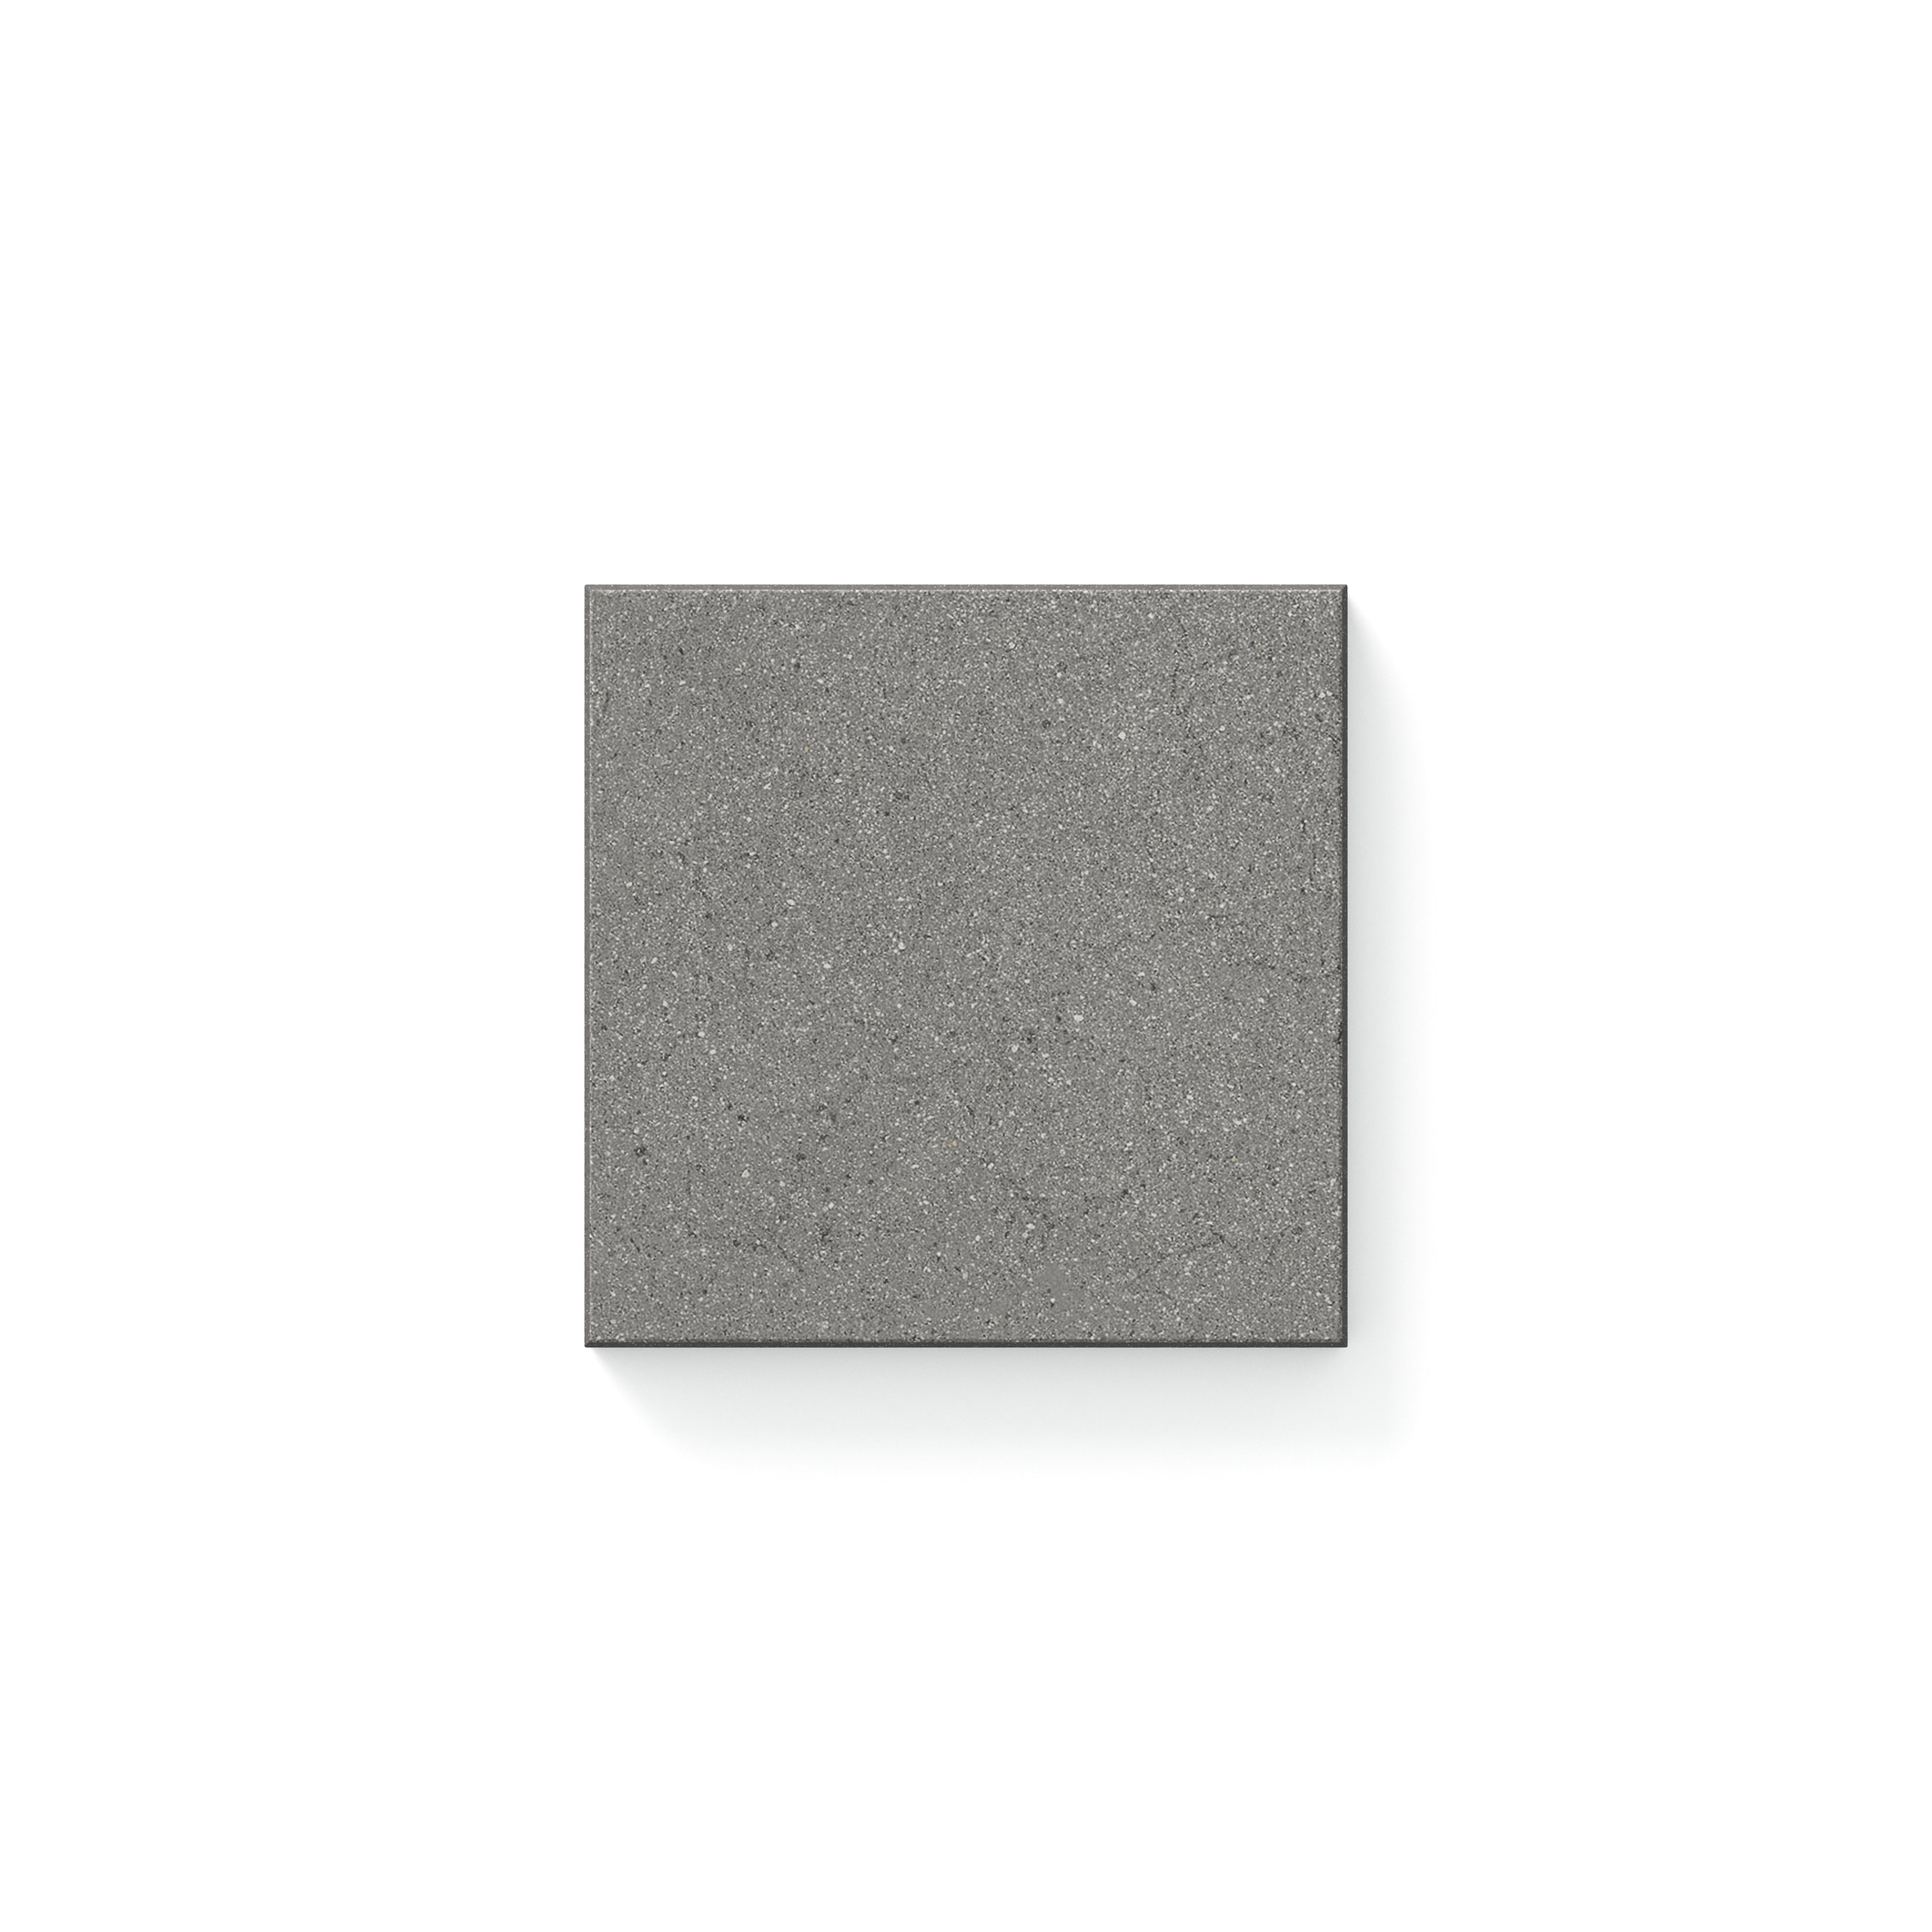 Palmer Matte Charcoal 4x4 Tile Sample